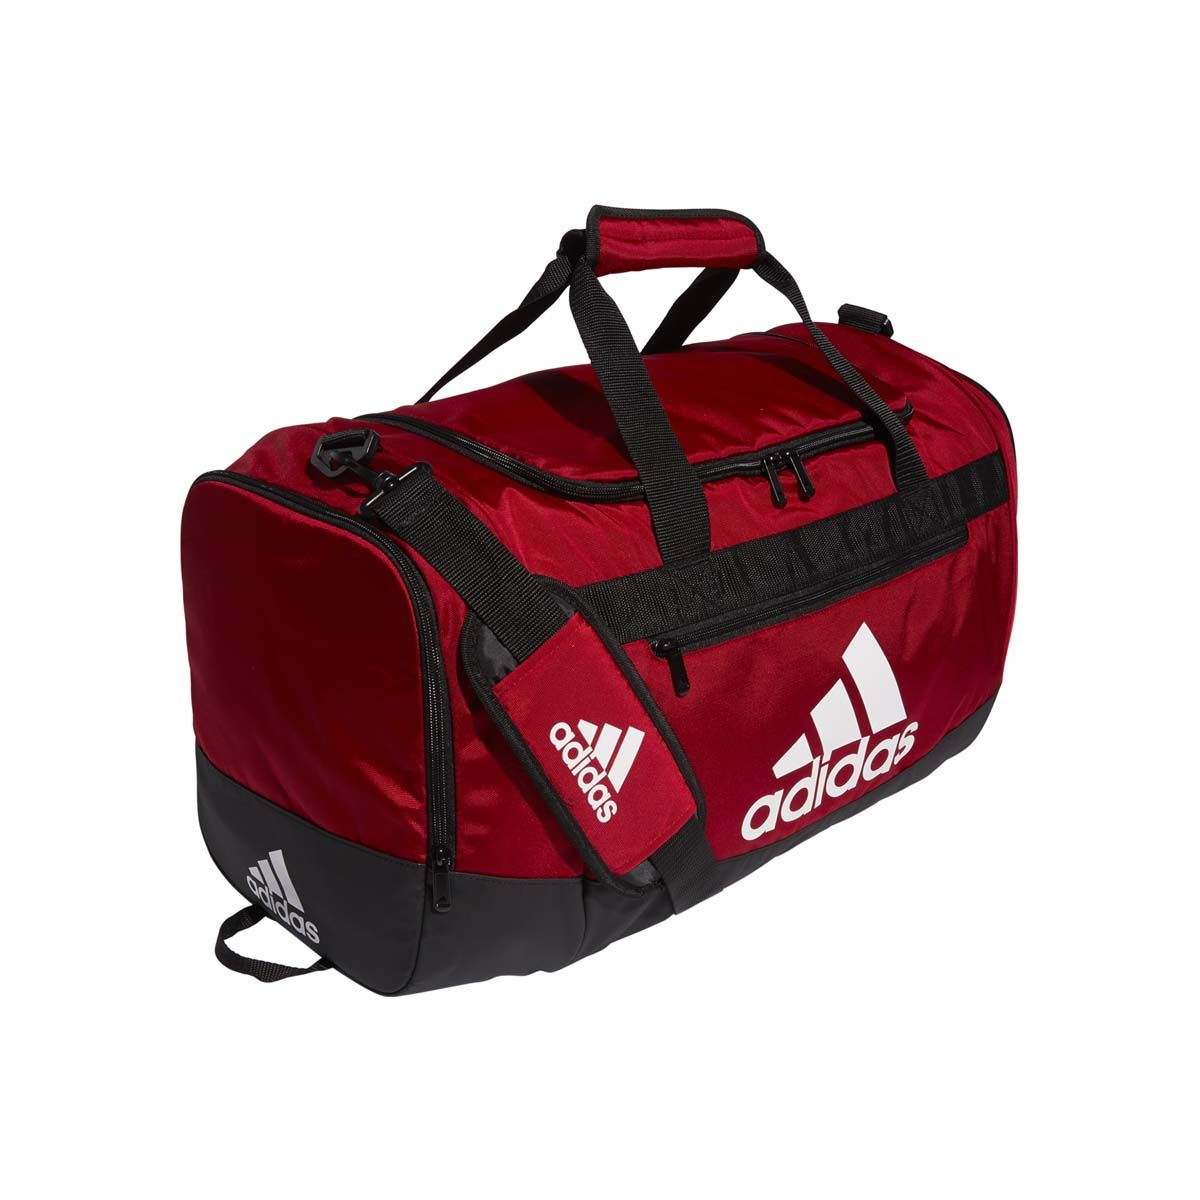 Adidas Defender IV Small Duffel Bag